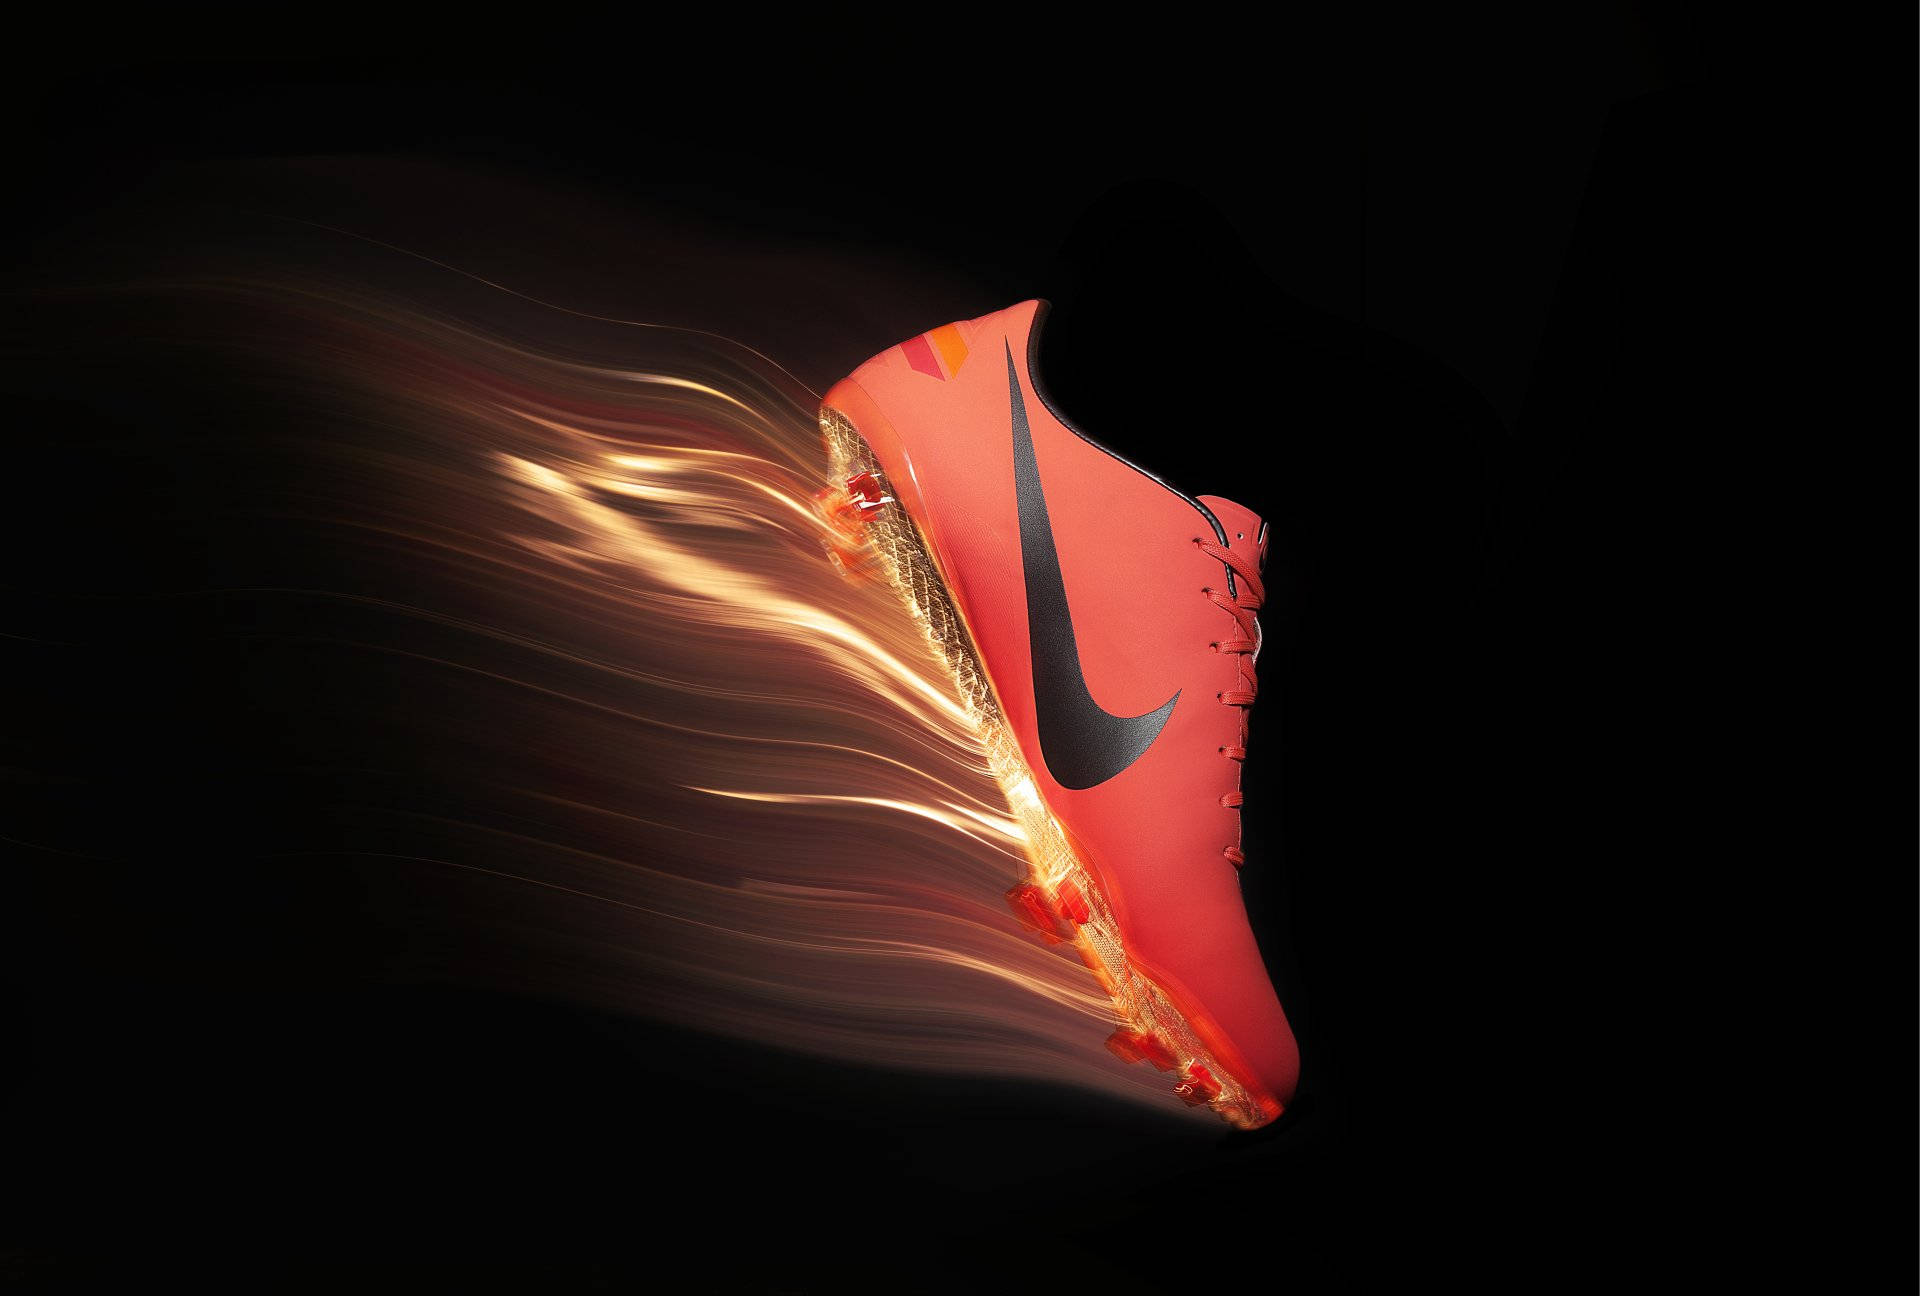 Nike Shoes With Swoosh Logo Background